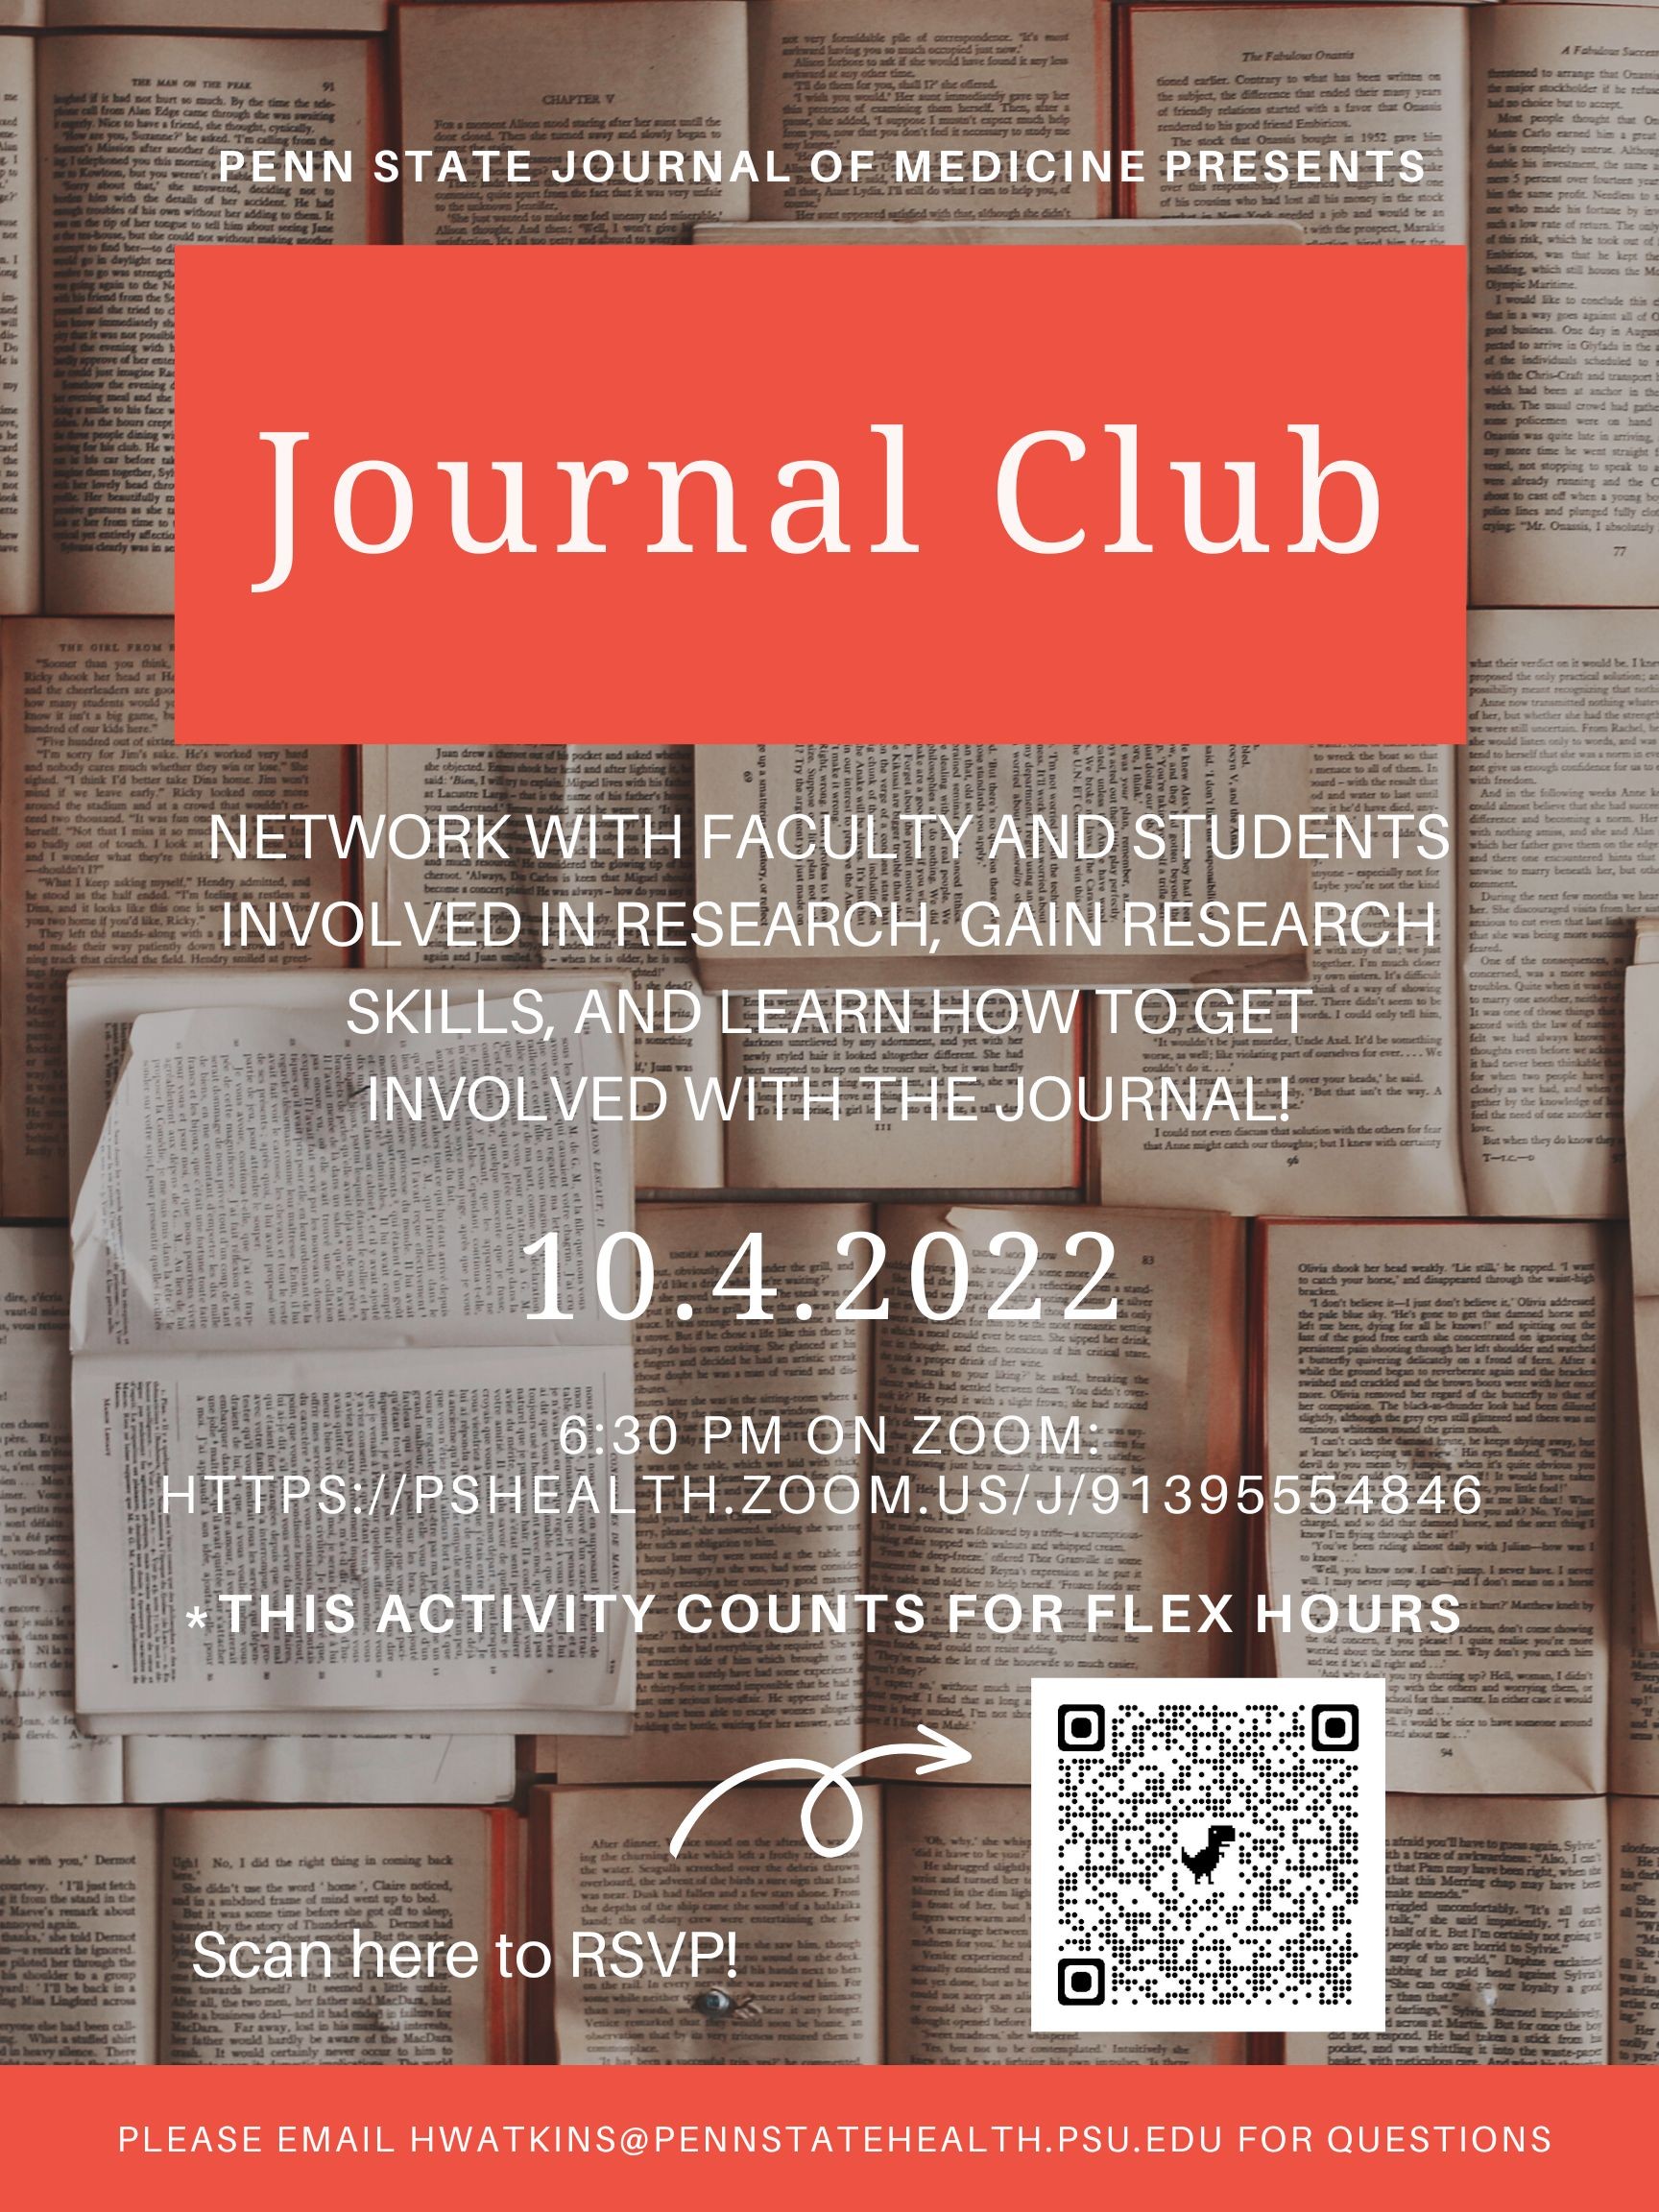 PSJM Journal Club Flyer